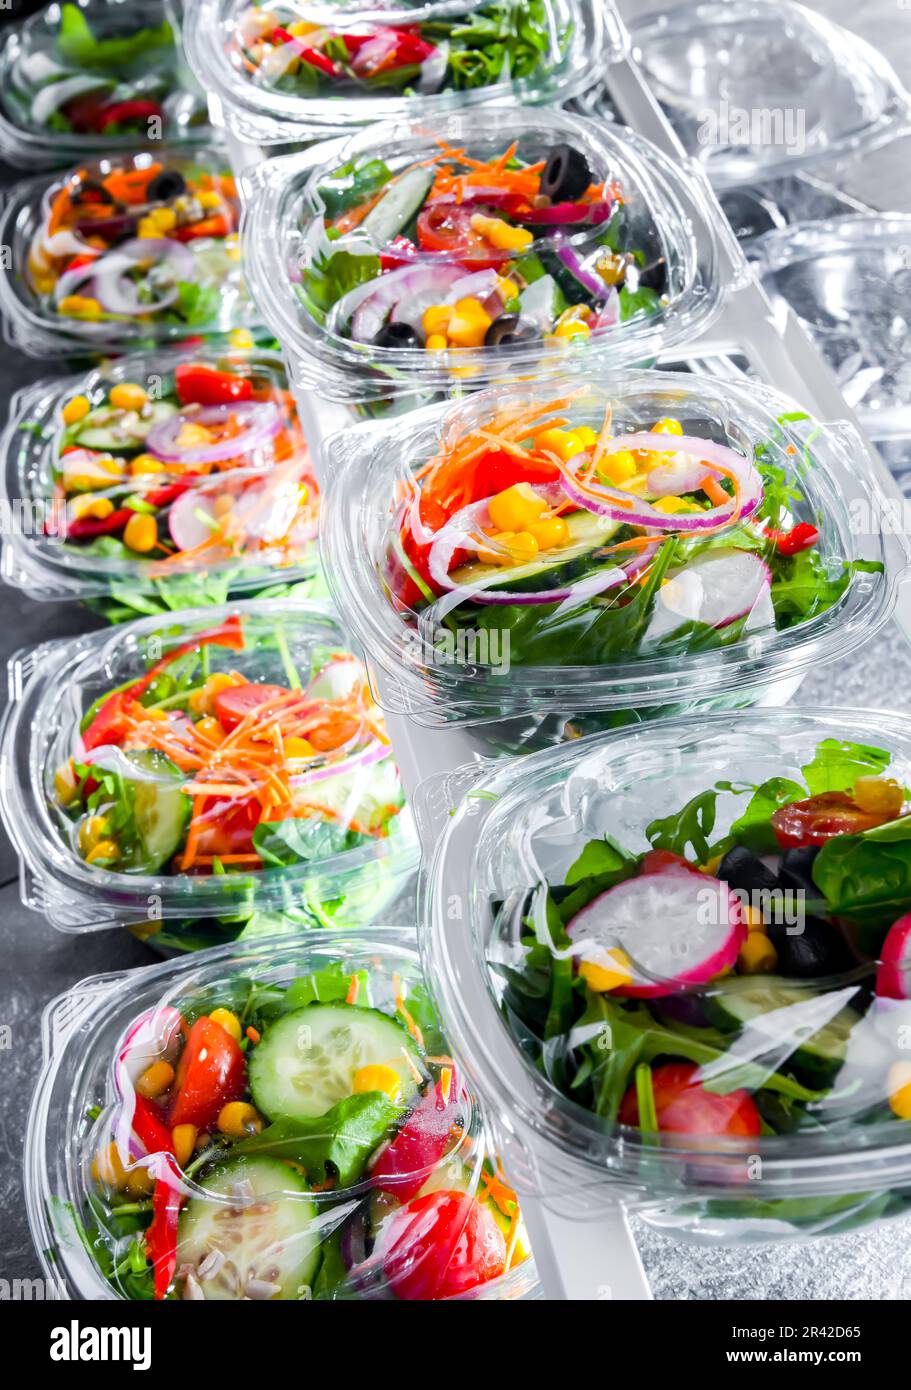 https://c8.alamy.com/comp/2R42D65/plastic-boxes-with-pre-packaged-vegetable-salads-2R42D65.jpg